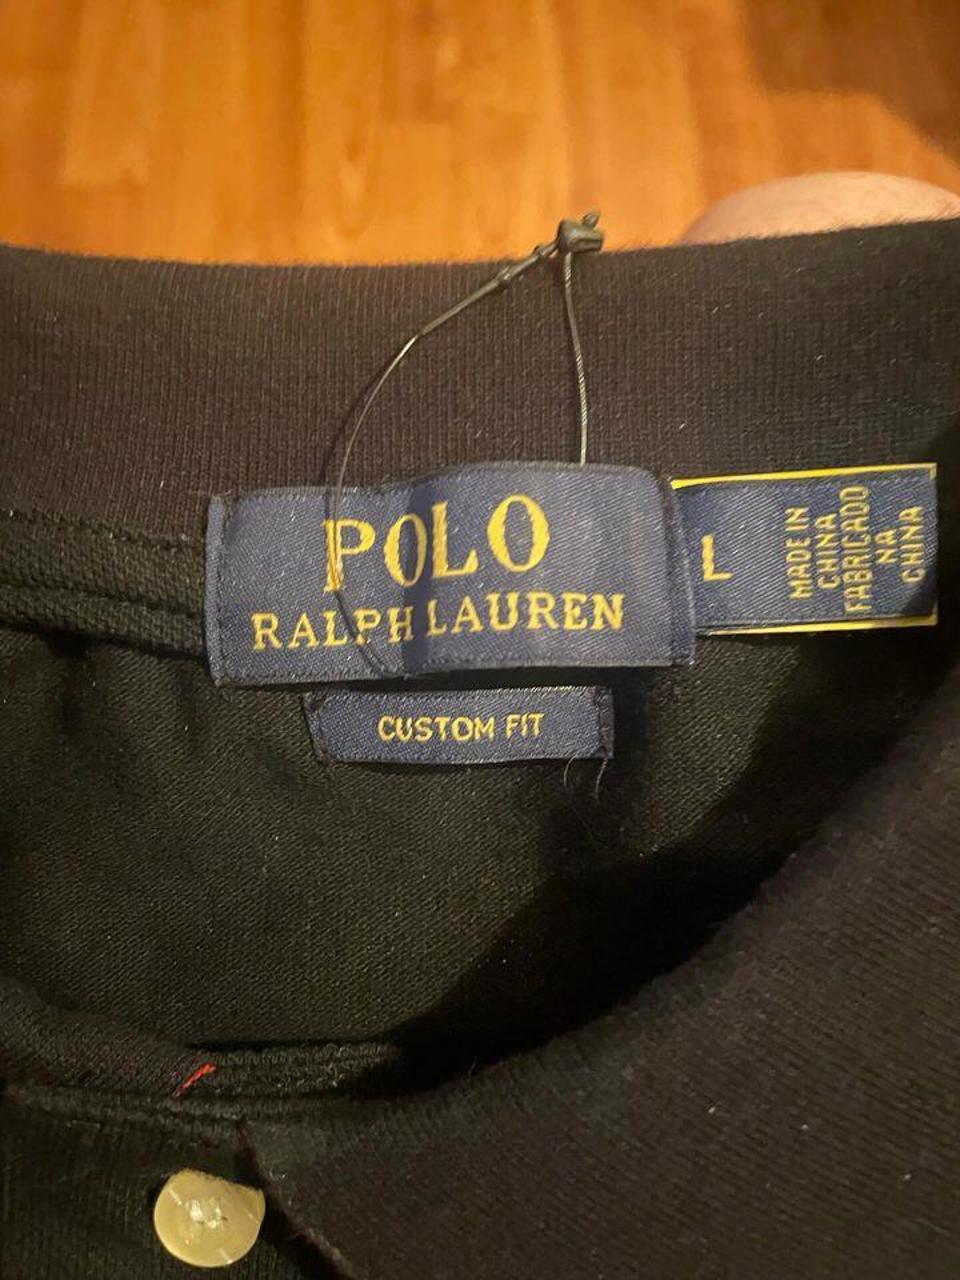 Polo shirt Thrifted send offers - Depop